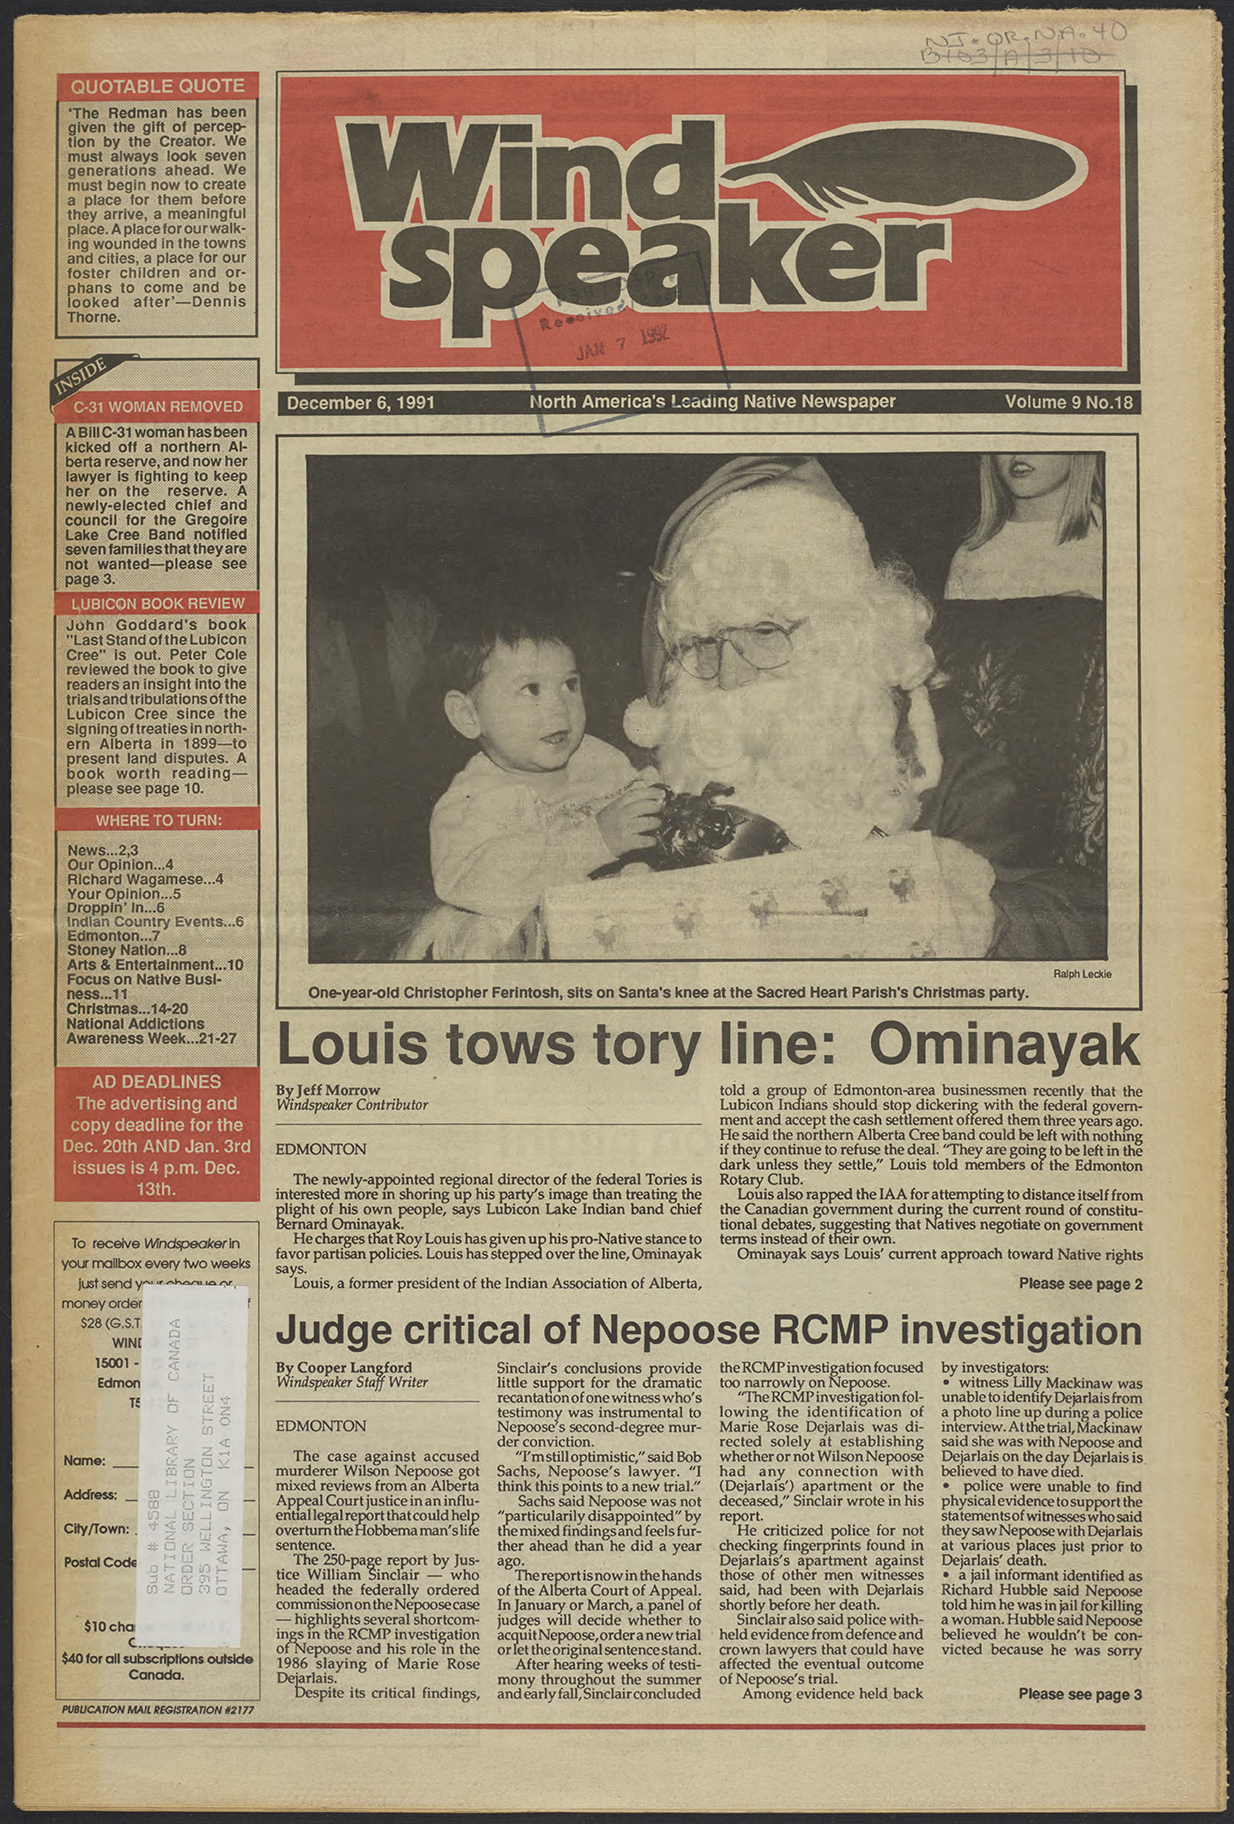 December 6, 1991 